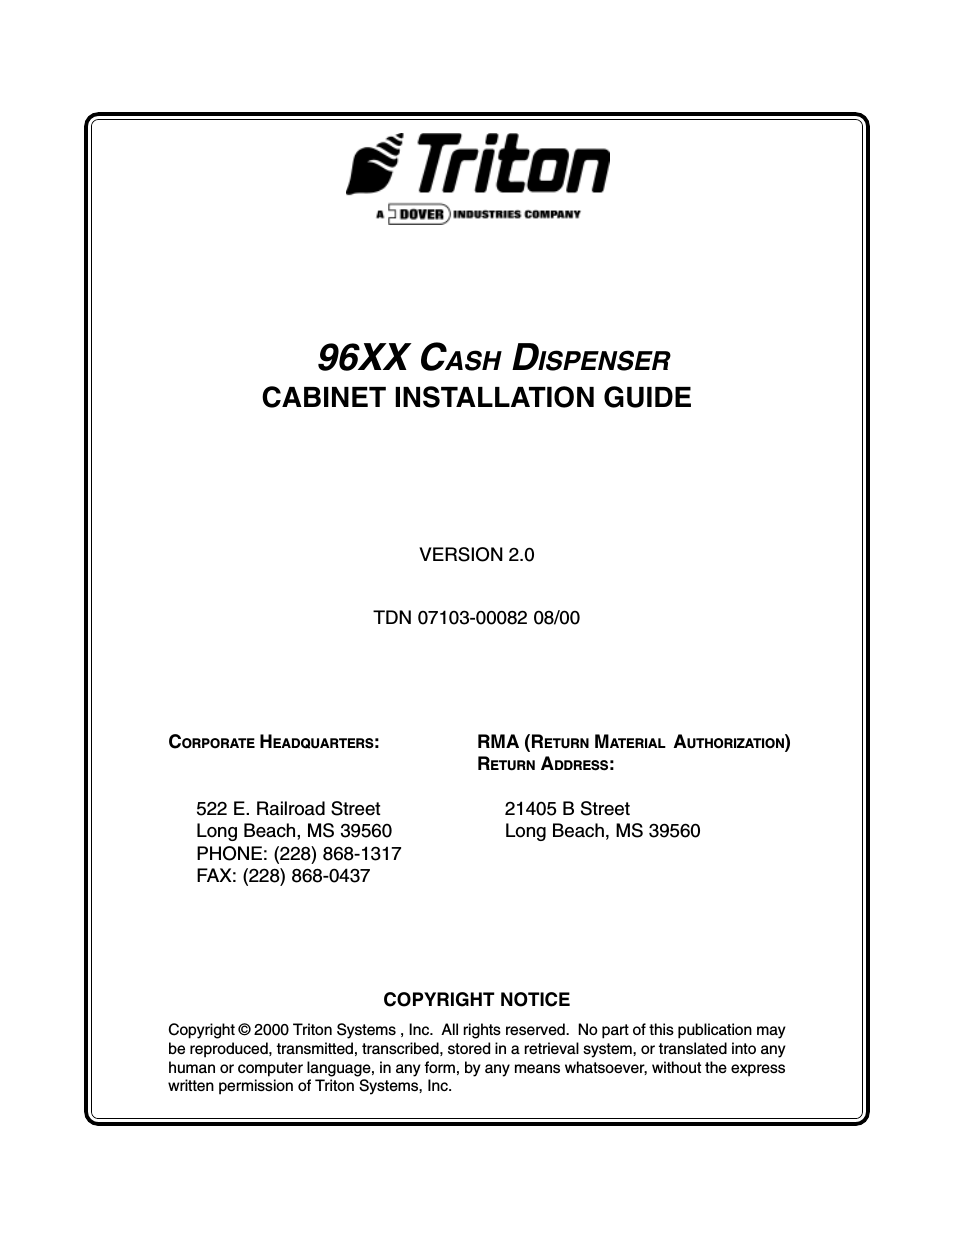 96XX CASH DISPENSER CABINET Installation Manual